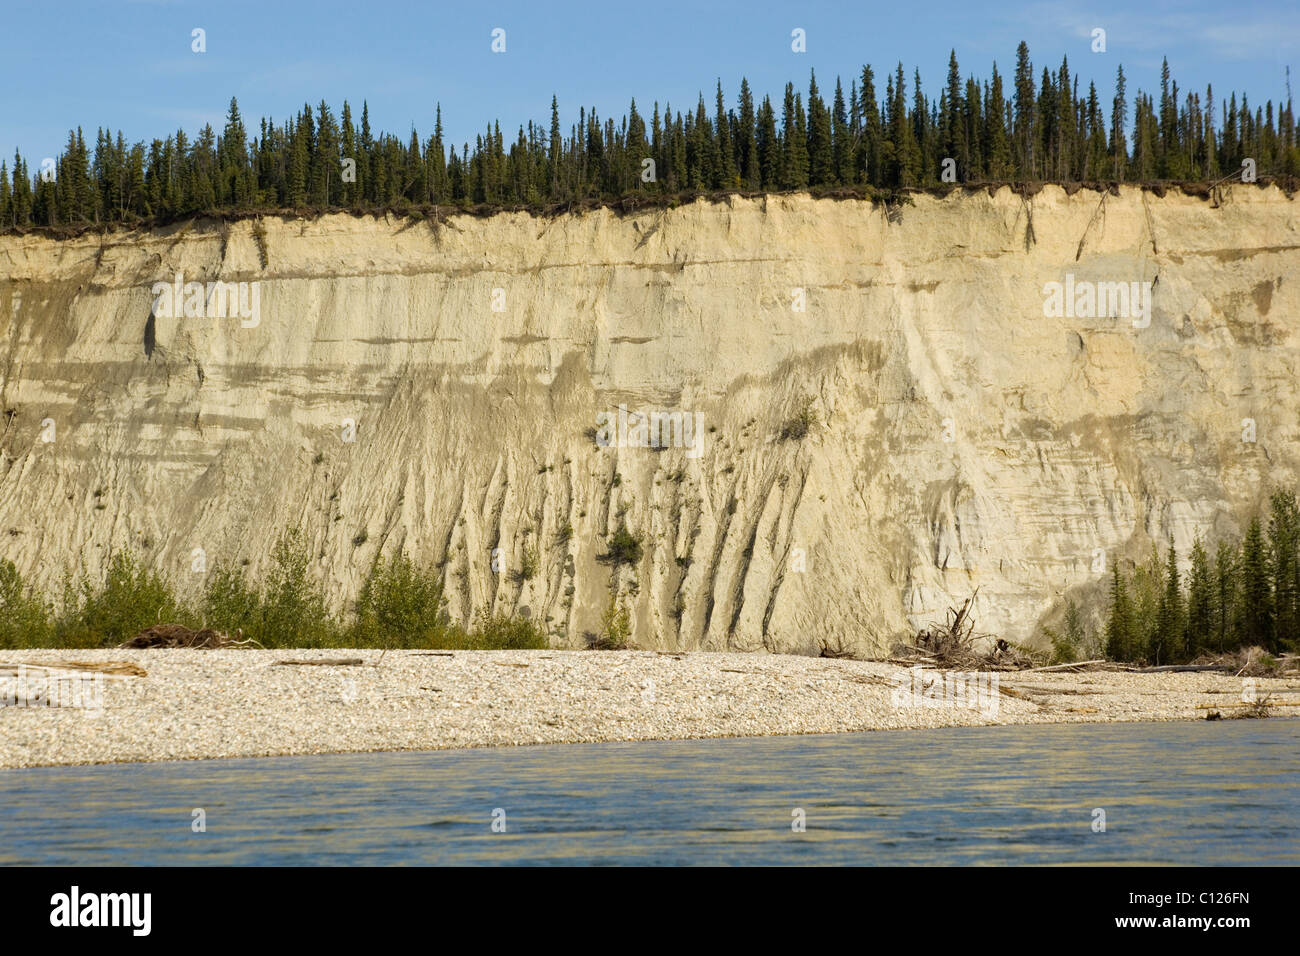 River shaping landscape, erosion in soft sandstone, high cut bank, cliff, upper Liard River, Yukon Territory, Canada Stock Photo